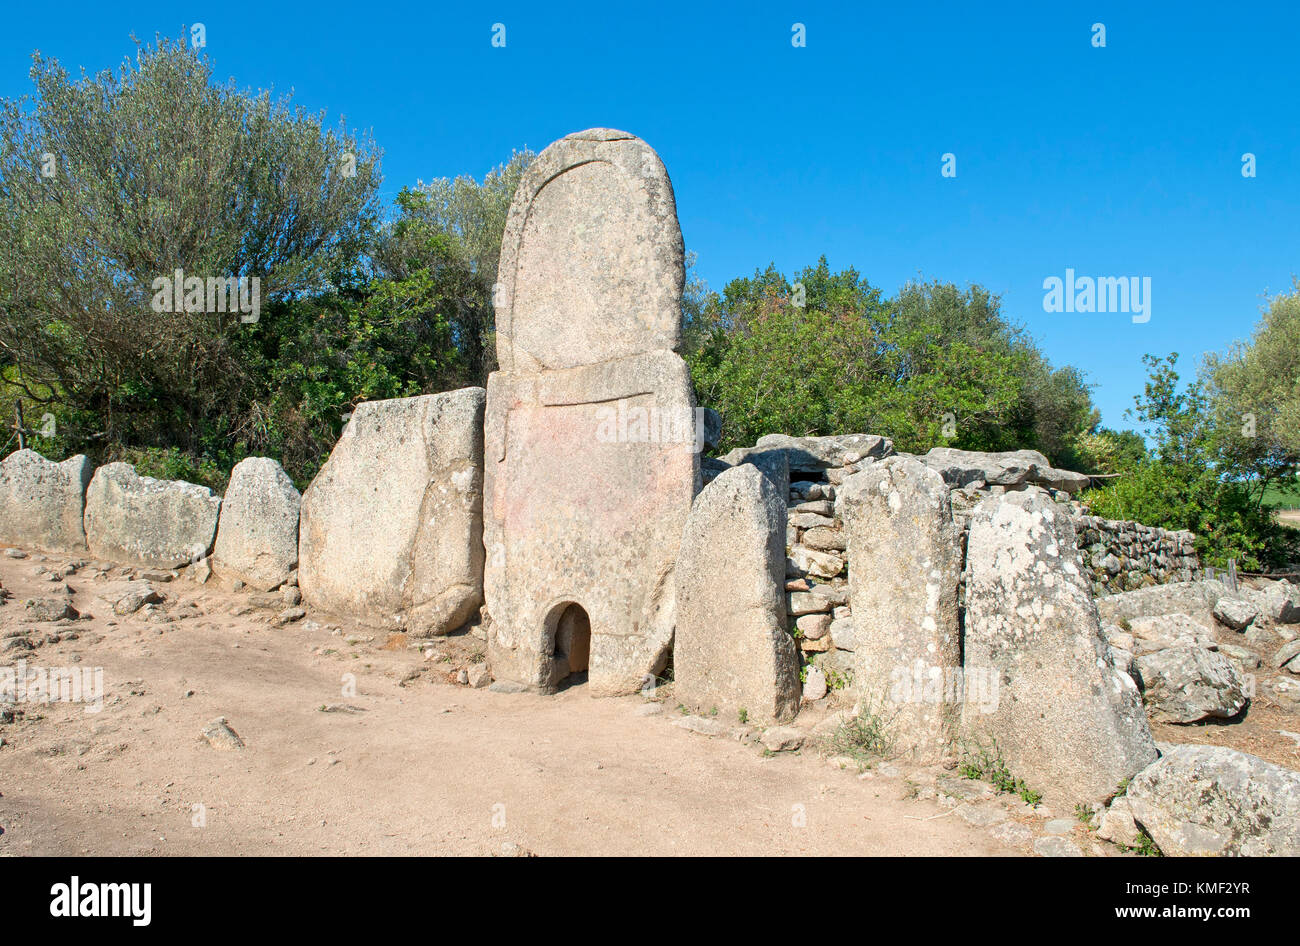 Tomba dei Giganti Coddu Vecchiu, tombe du géant de Coddu Vecchiu, Arcachena, Costa Smeralda, Sardaigne, Italie, Europe Banque D'Images